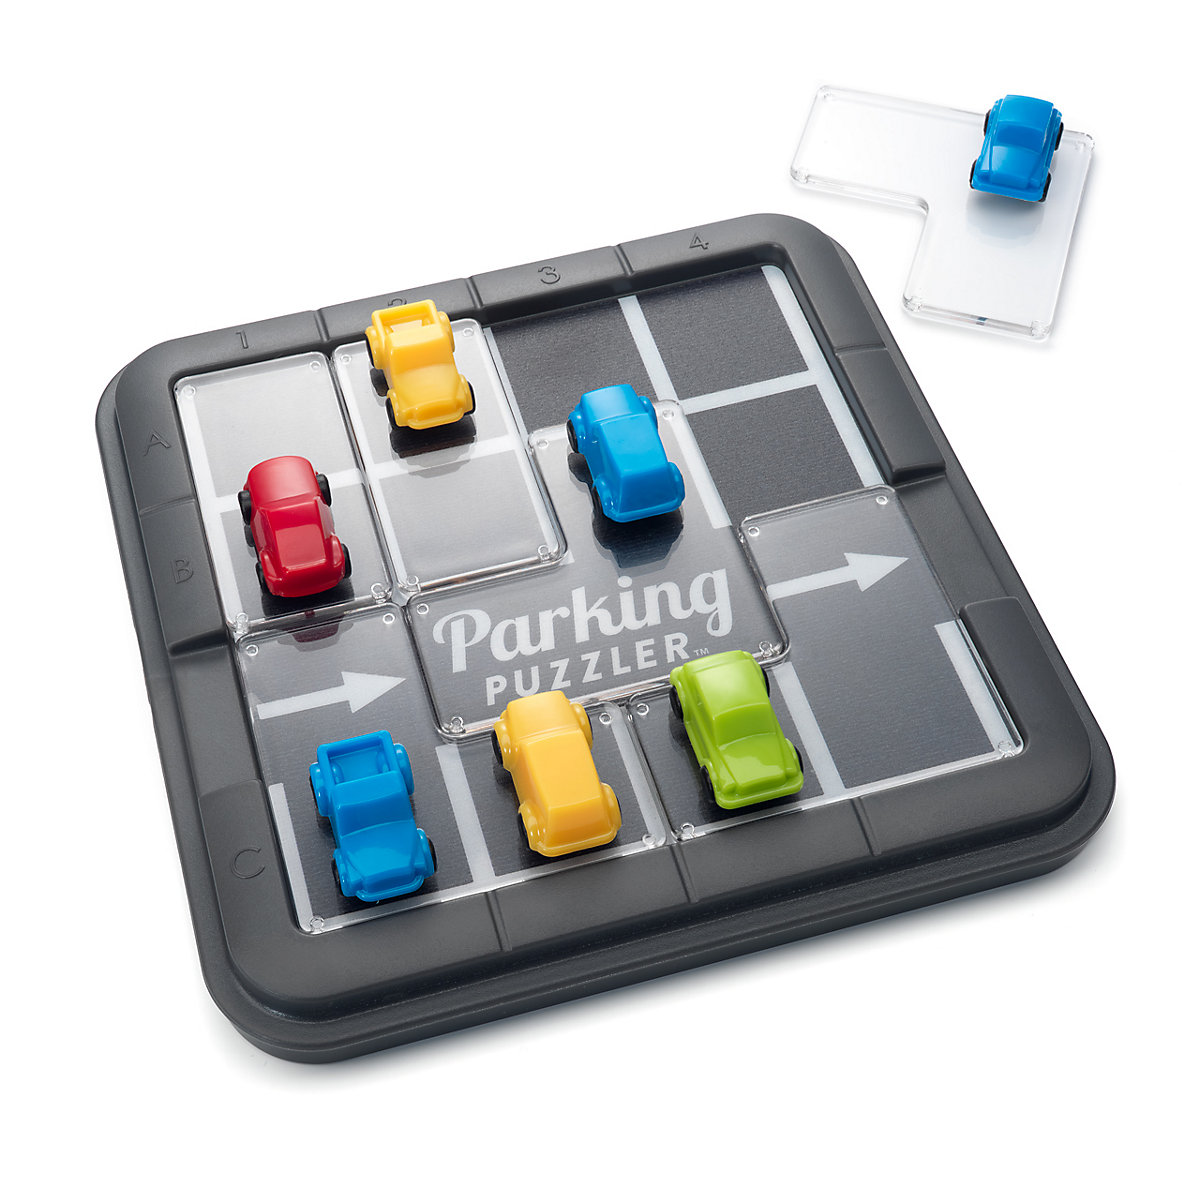 Smart Games SmartGames Parking Puzzler